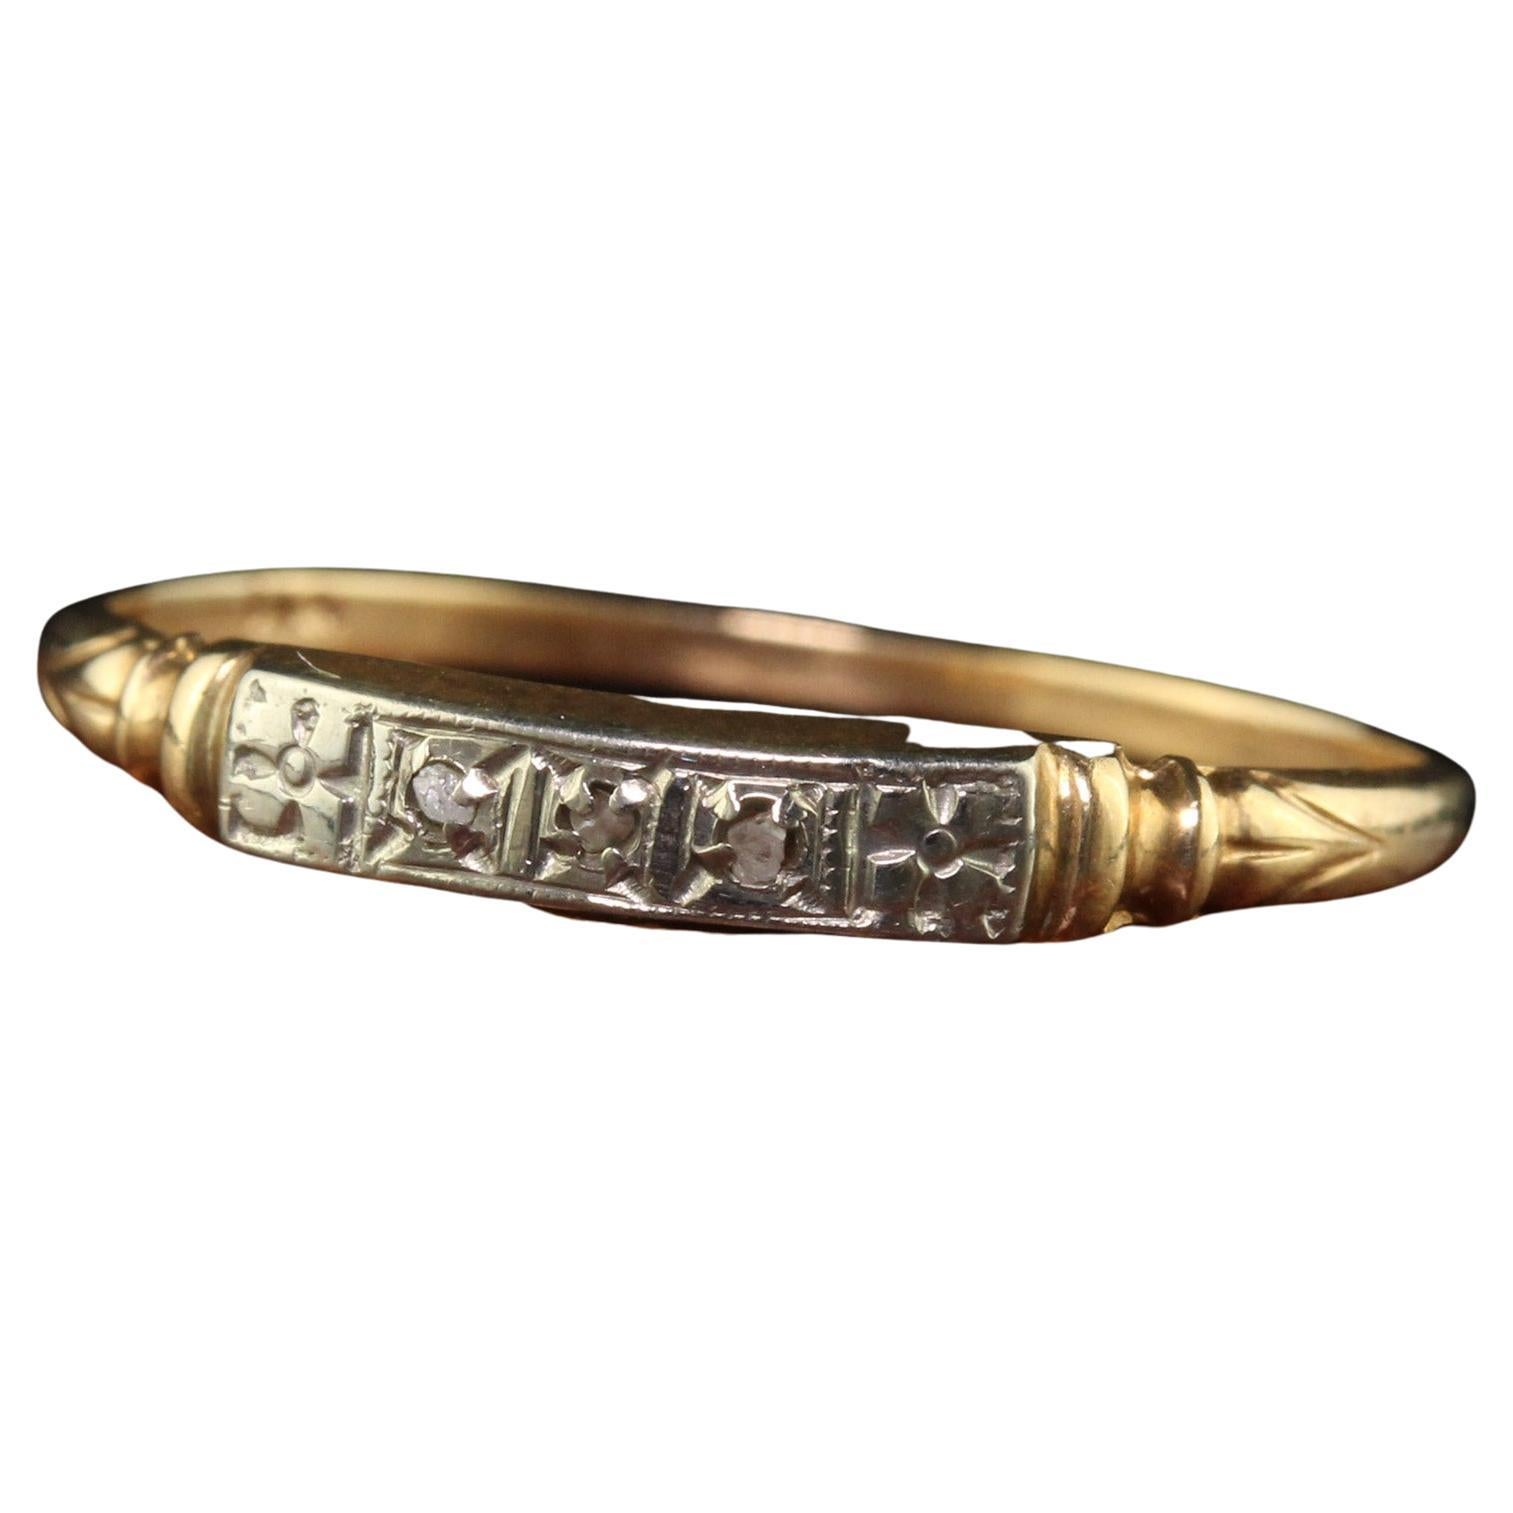 Antique Art Deco 14K Yellow Gold Rose Cut Diamond Wedding Band - Size 6 1/4